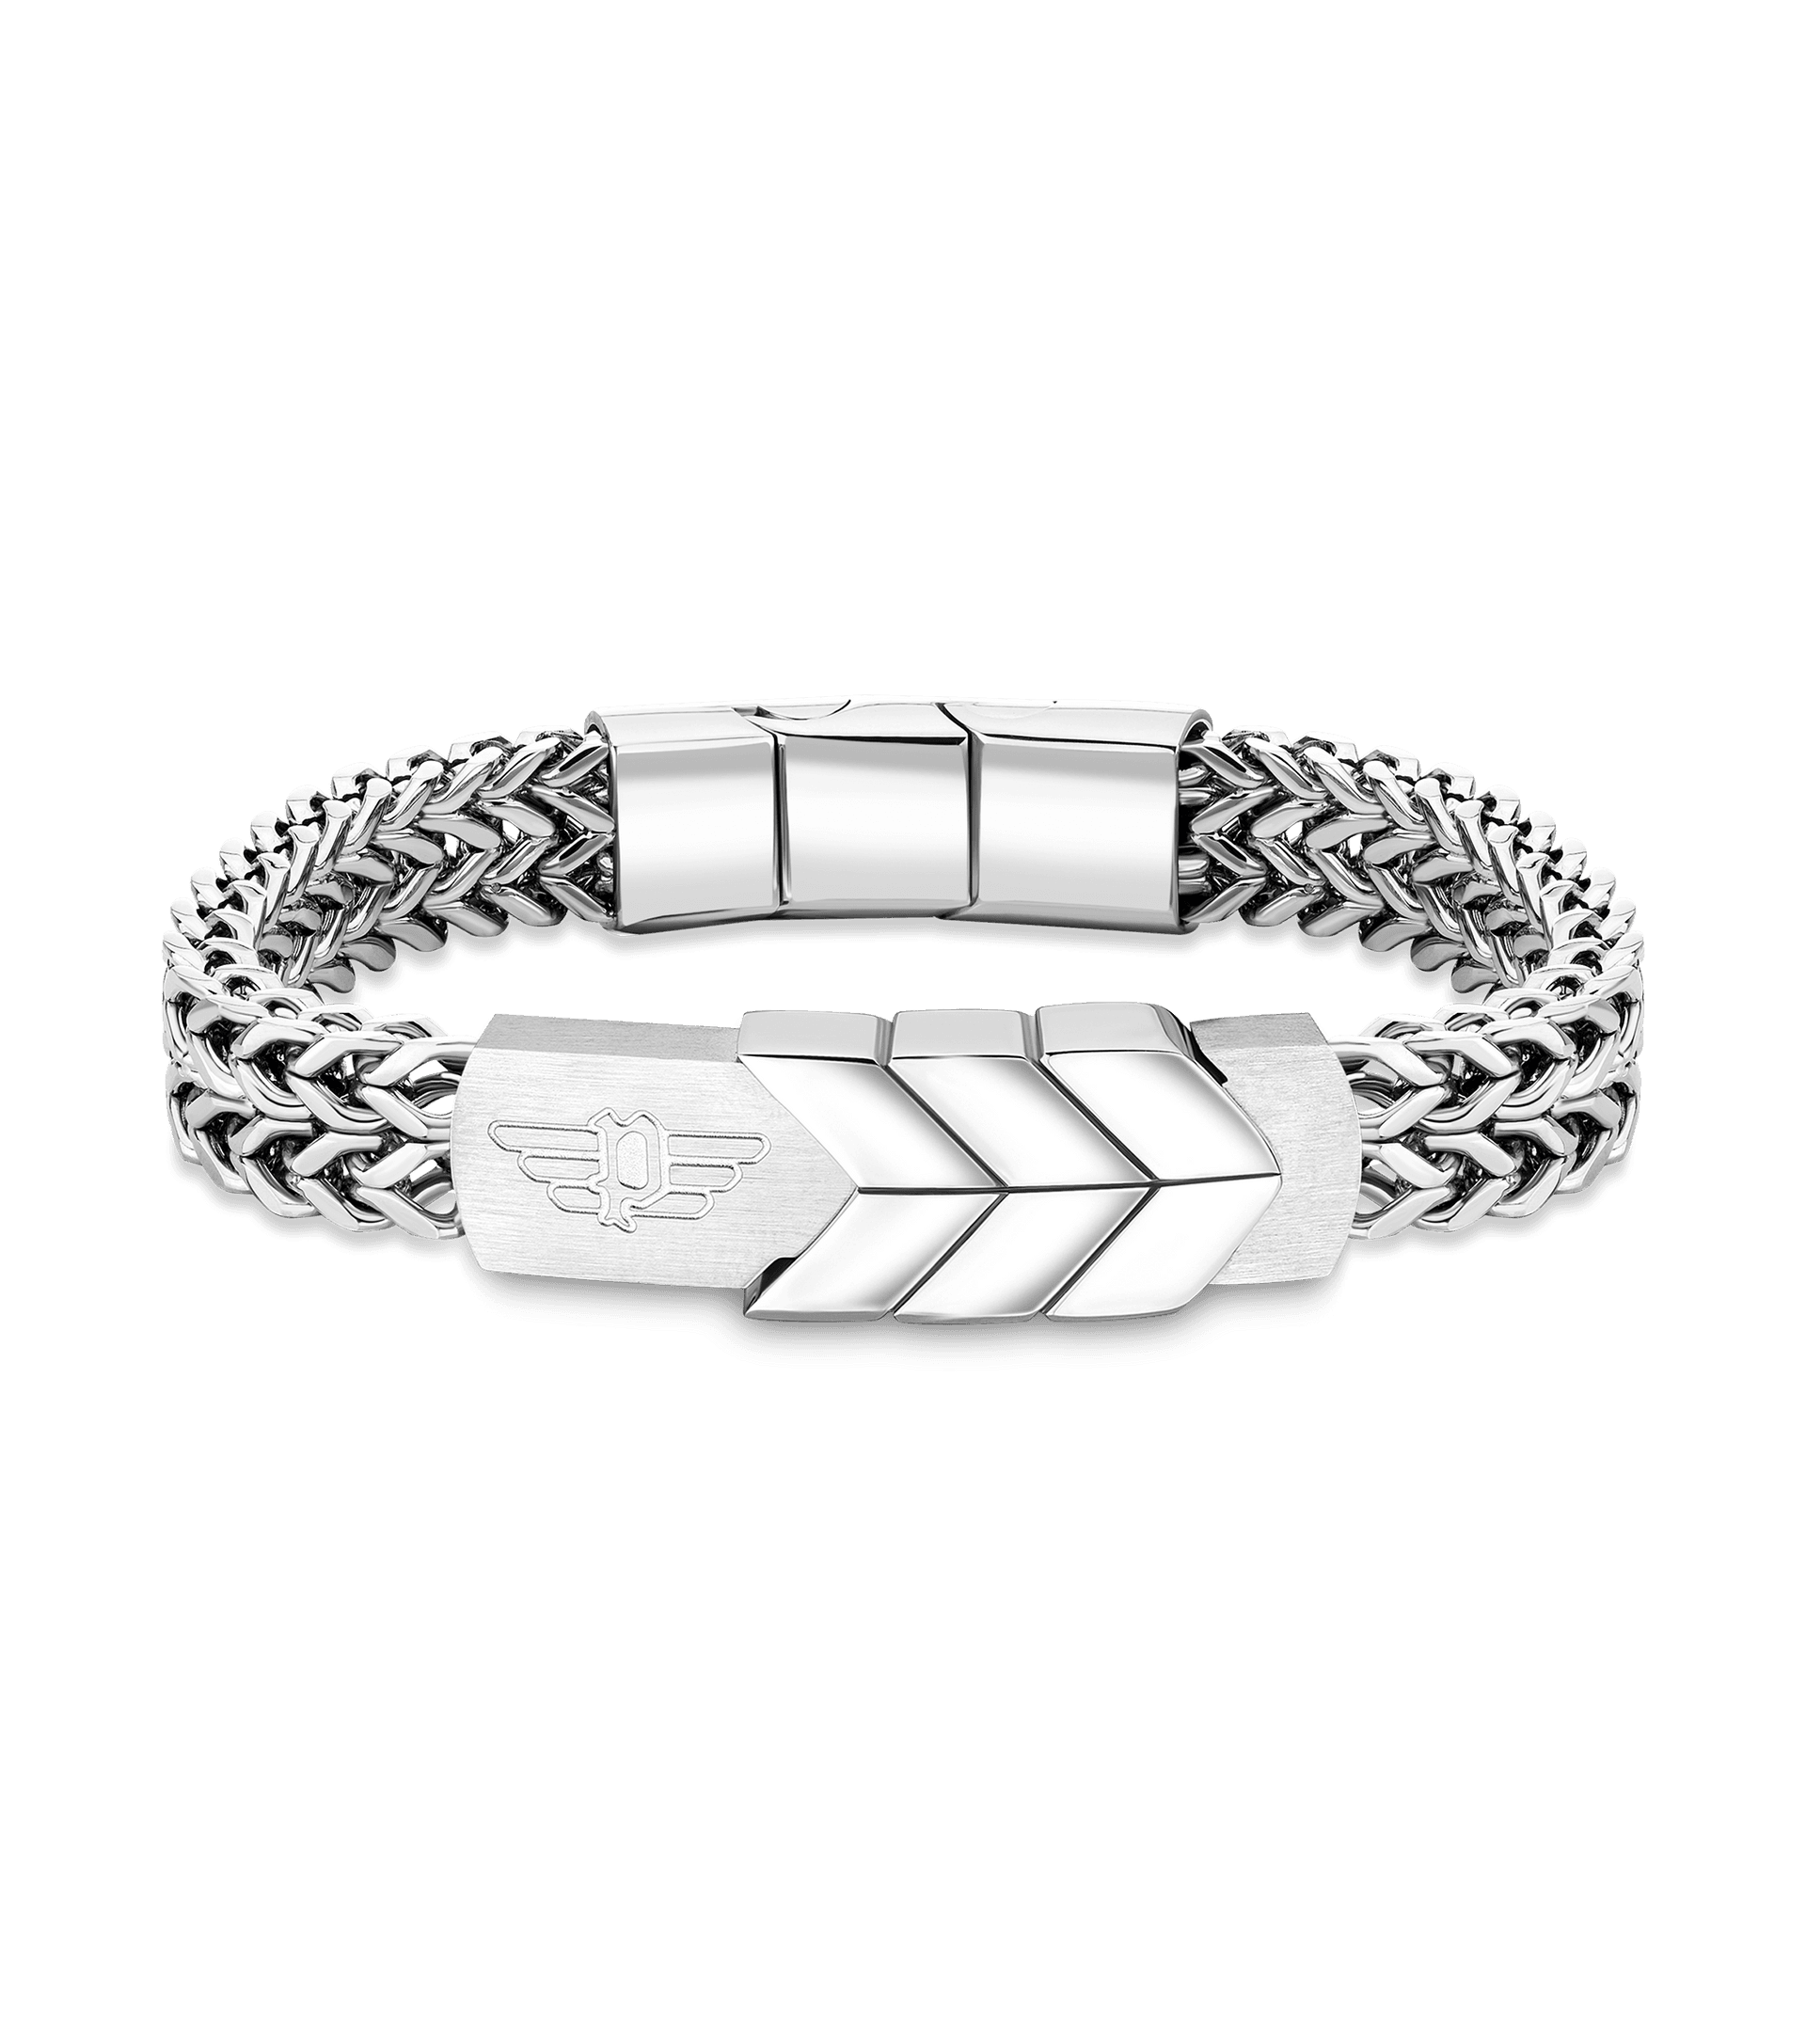 Police jewels - Valorious Armband Von Police Für Männer PEAGB2120322